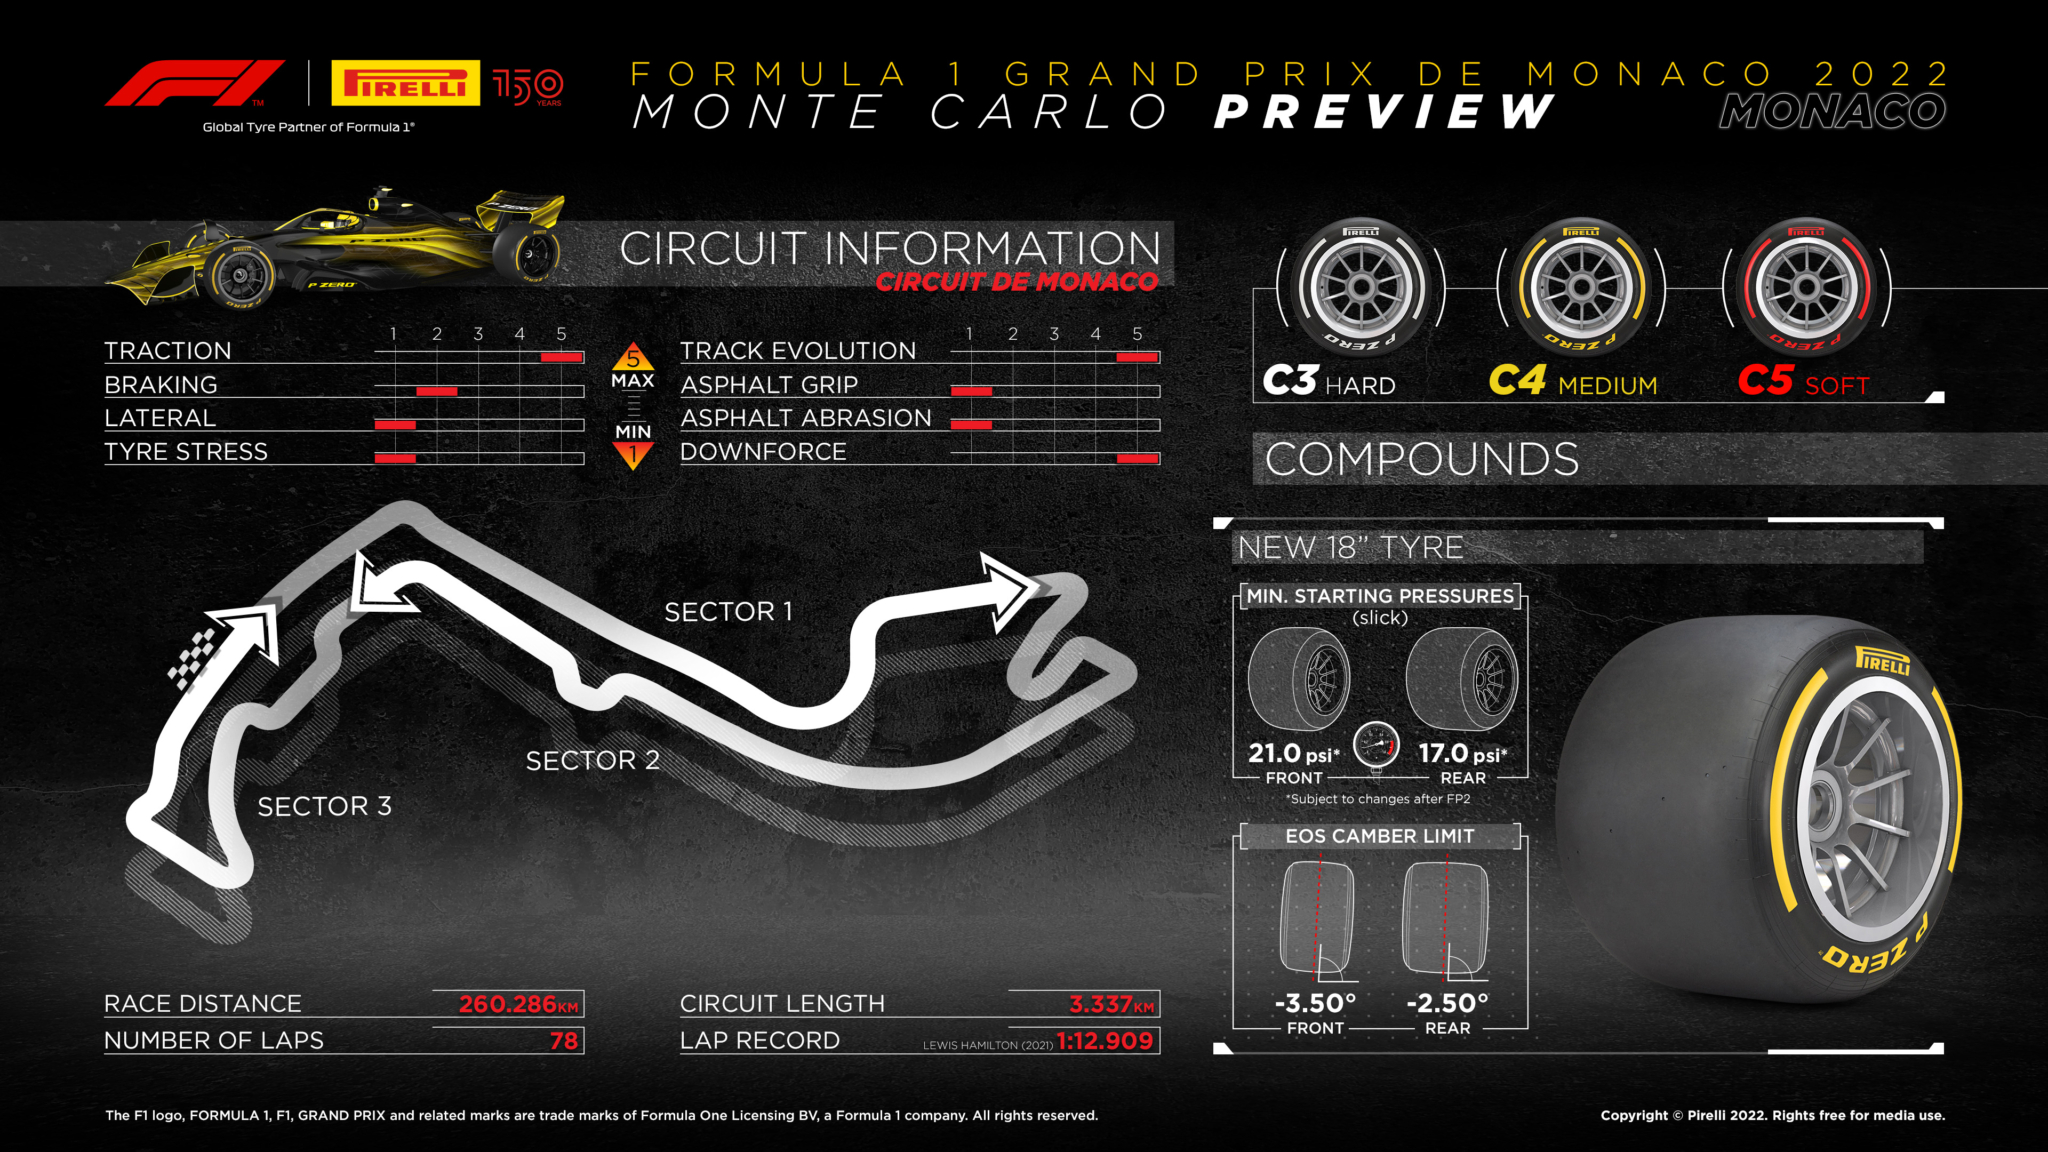 Pirelli to bring softest F1 compound to Monaco